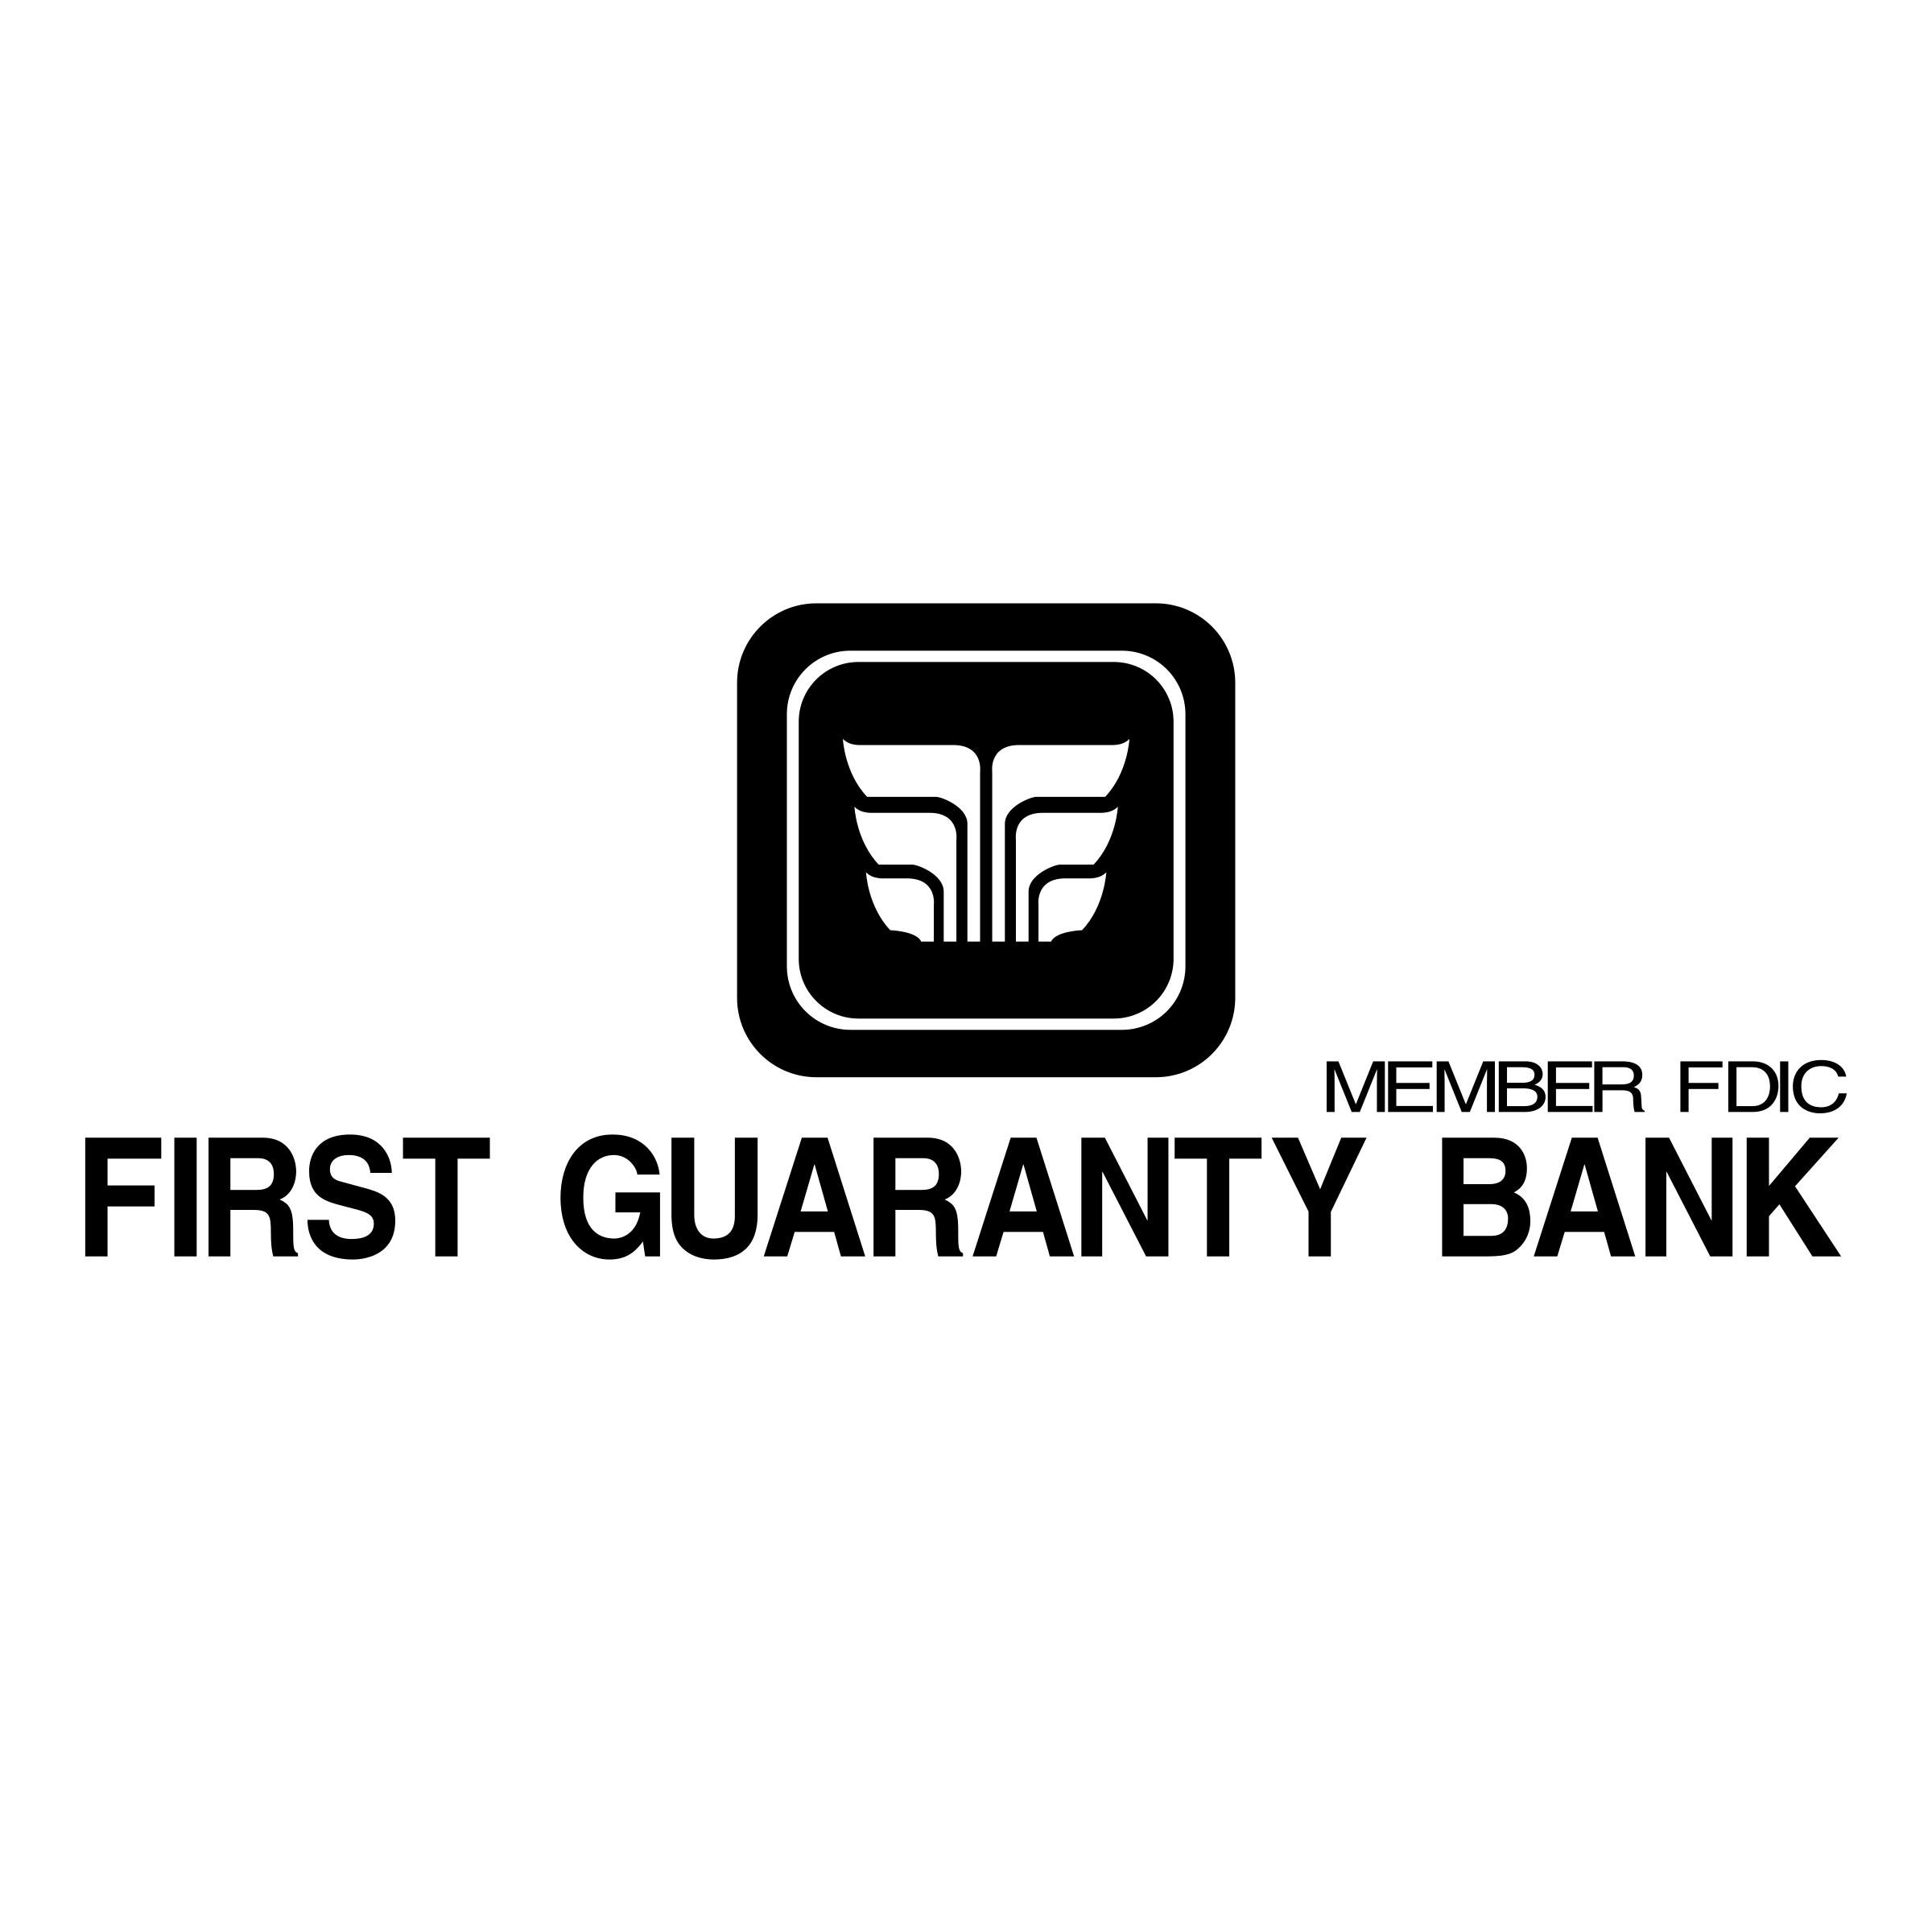 Www.guarantybank.com Logo - First Guaranty Bank Logo PNG Transparent & SVG Vector